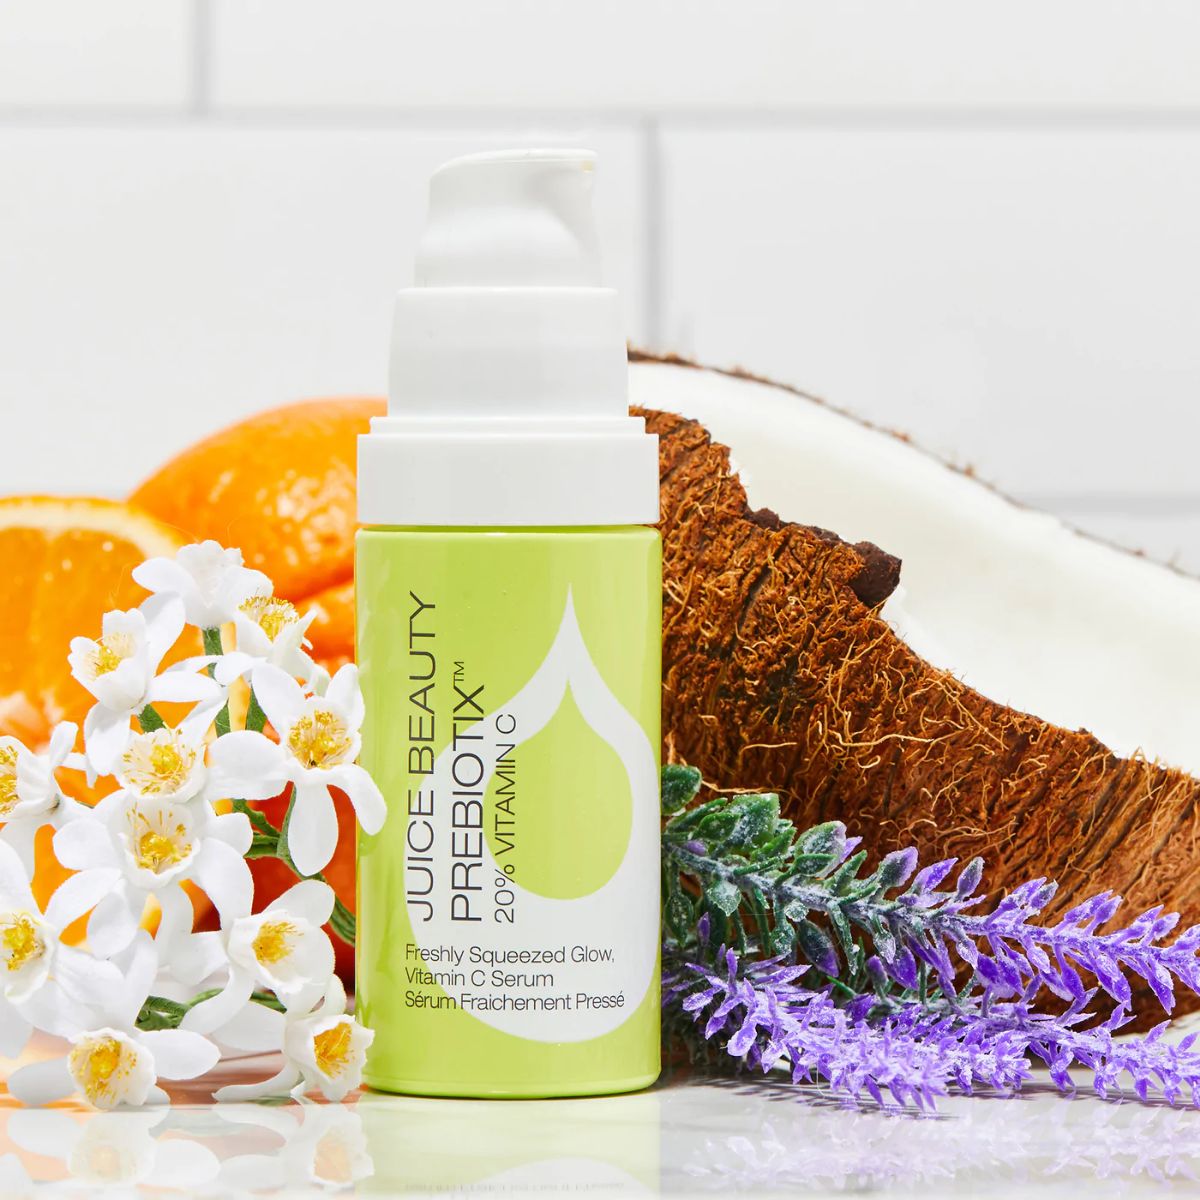 Juice Beauty Prebiotix Freshly Squeezed Glow Vitamin C Serum 27ml – lifestyle product image